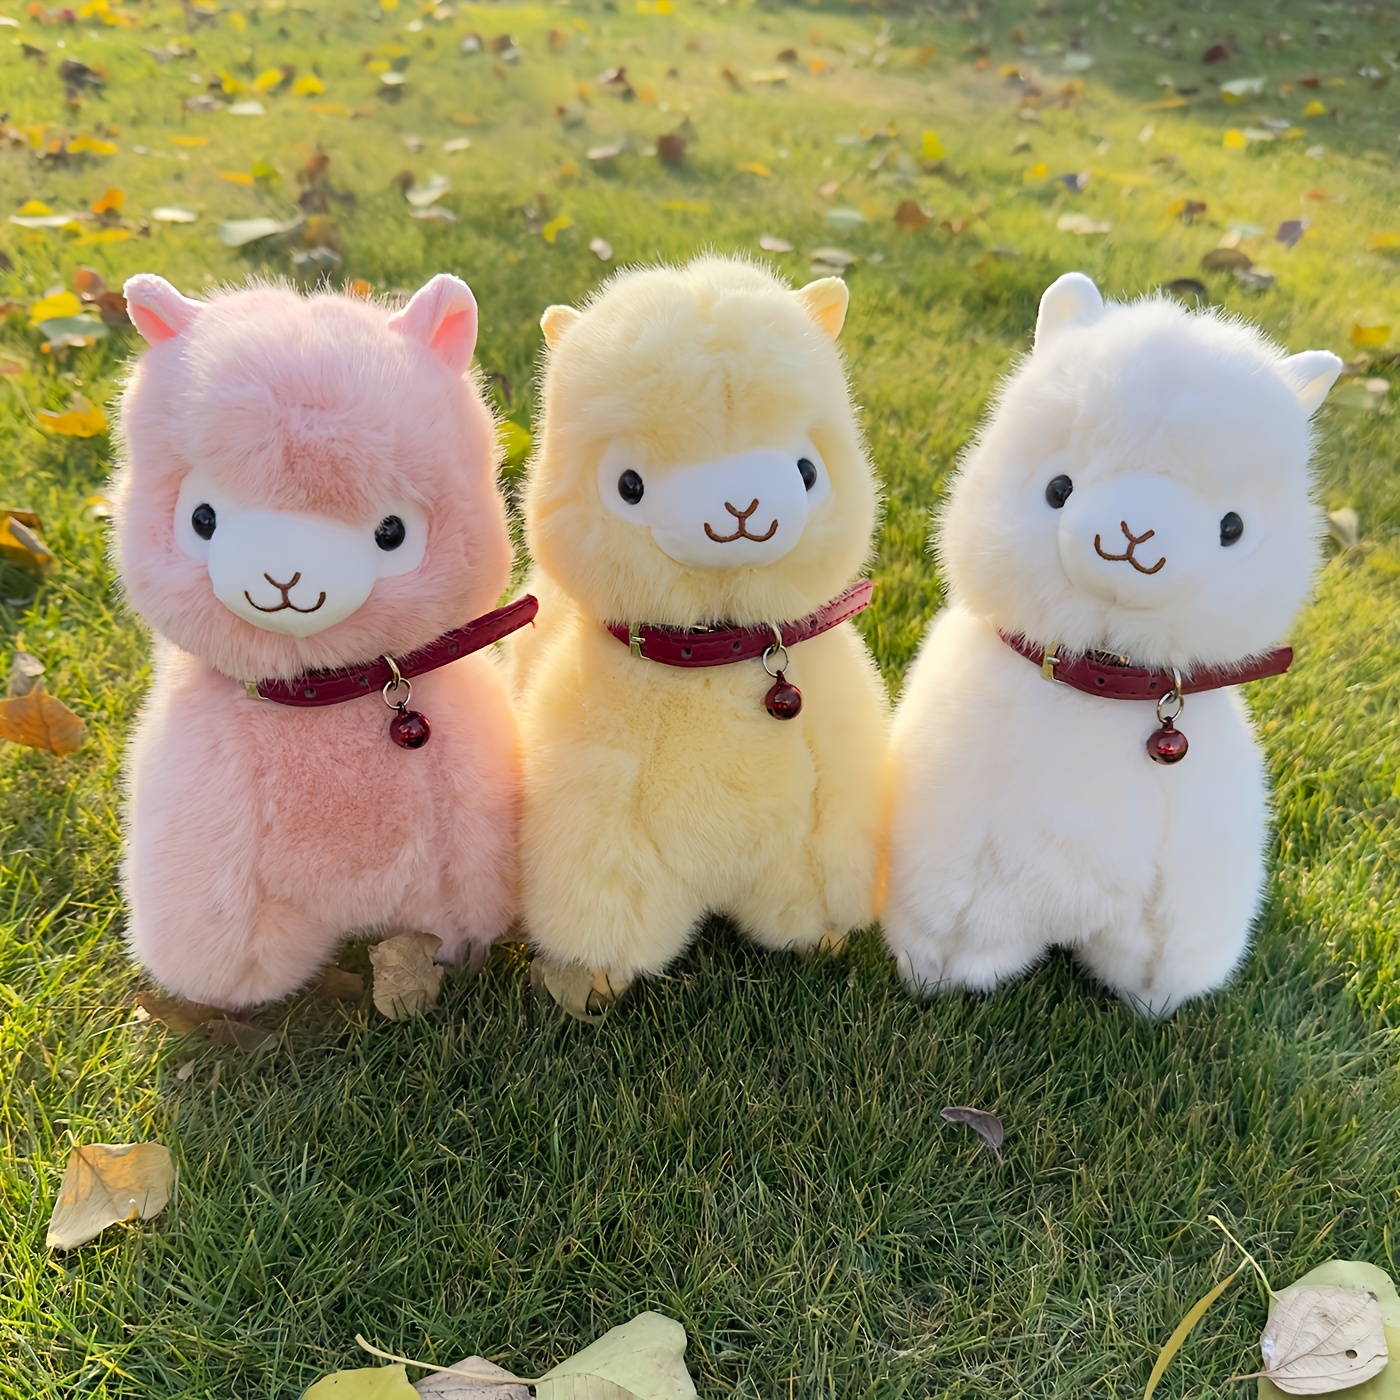 Wallpaper  Cute stuffed animals, Kawaii alpaca, Kawaii plush